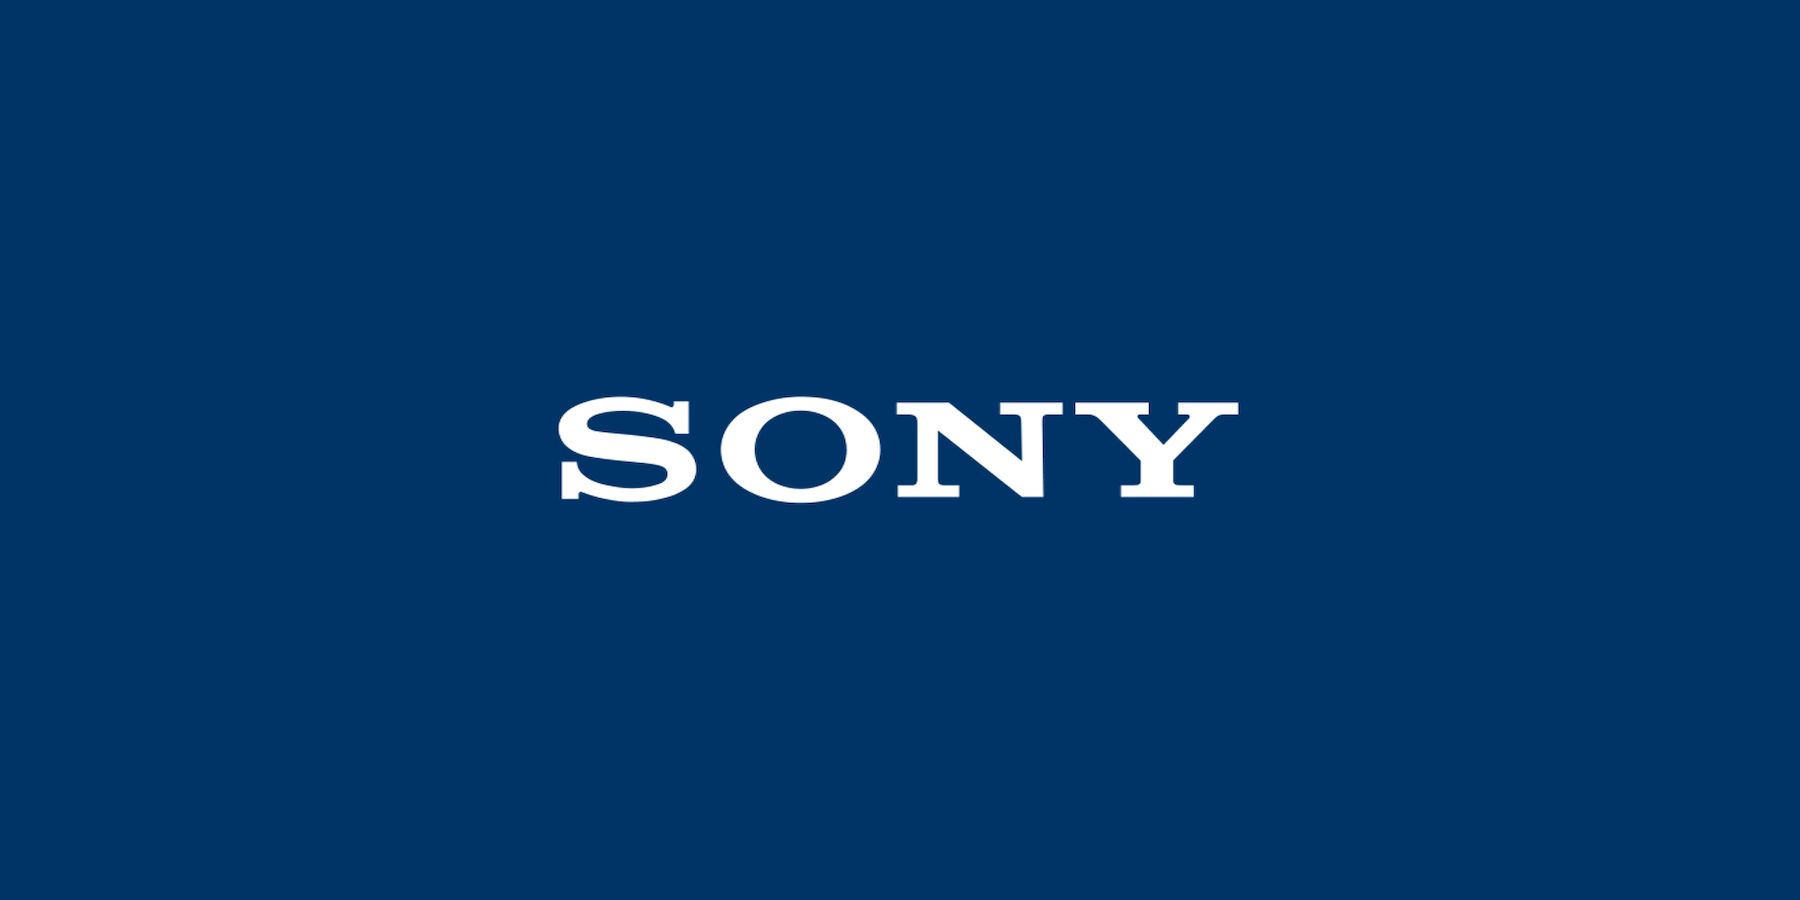 white-sony-logo-against-dark-blue-background